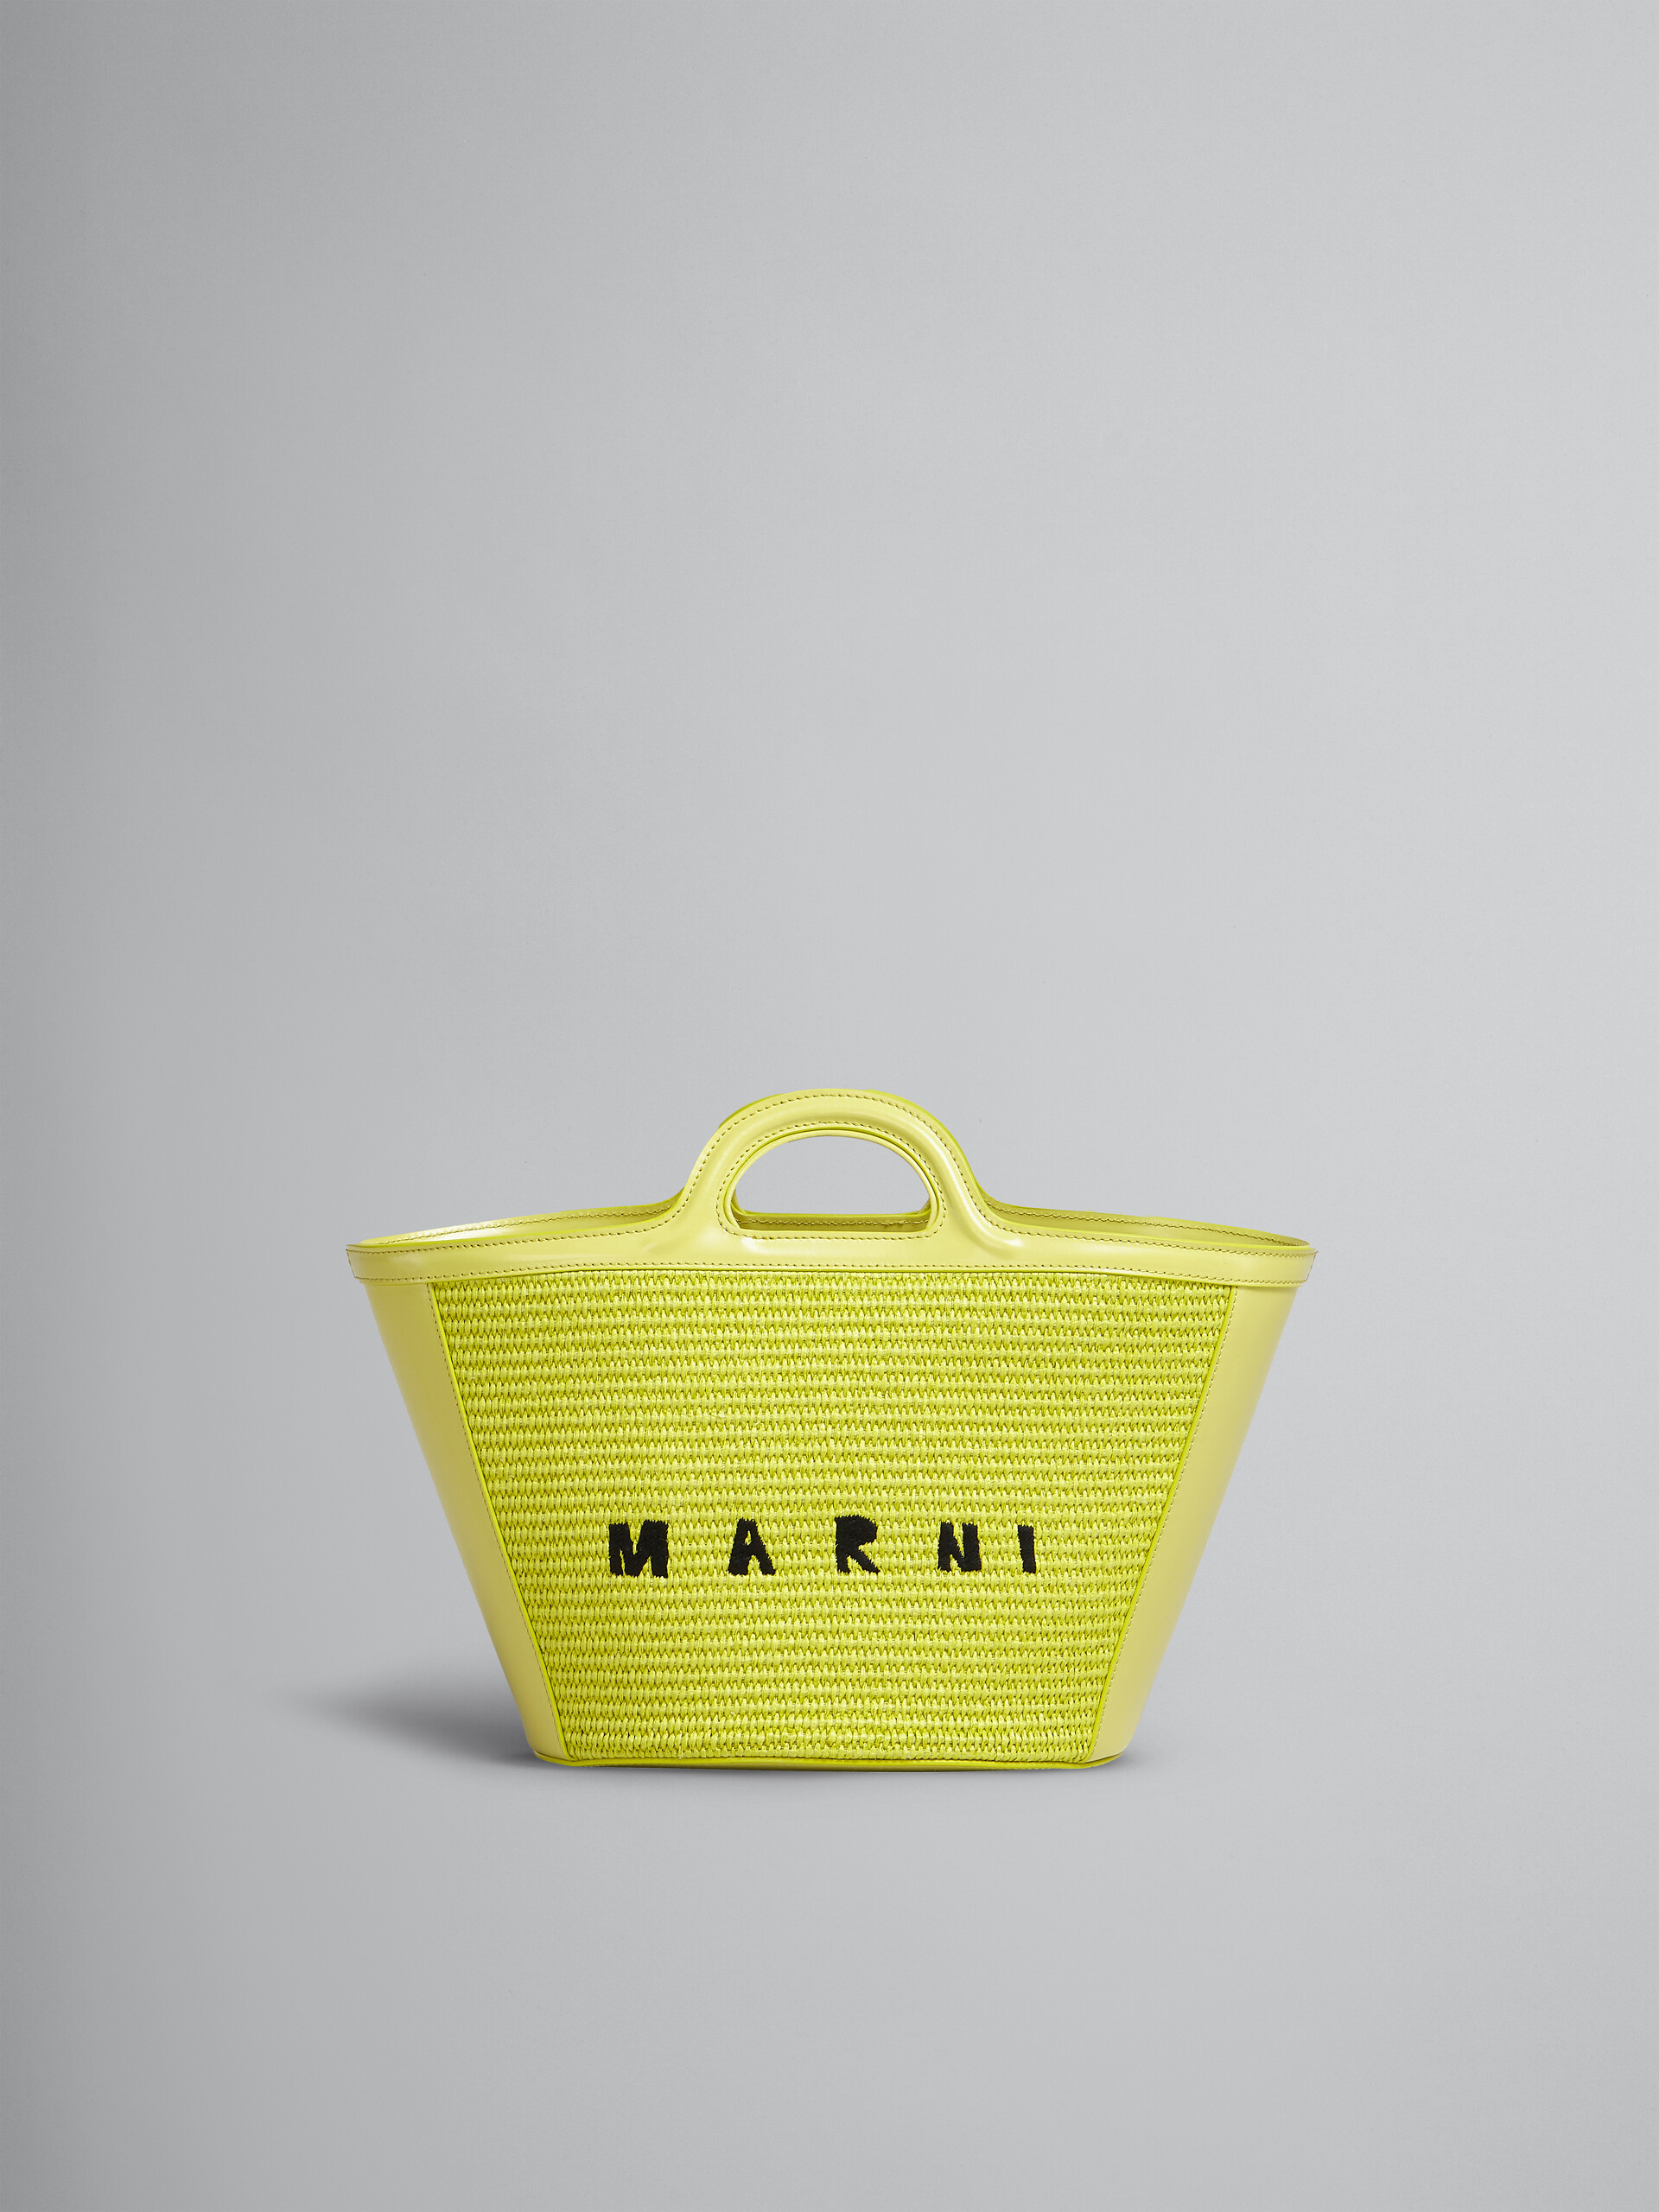 TROPICALIA small bag in yellow leather and raffia - Handbags - Image 1